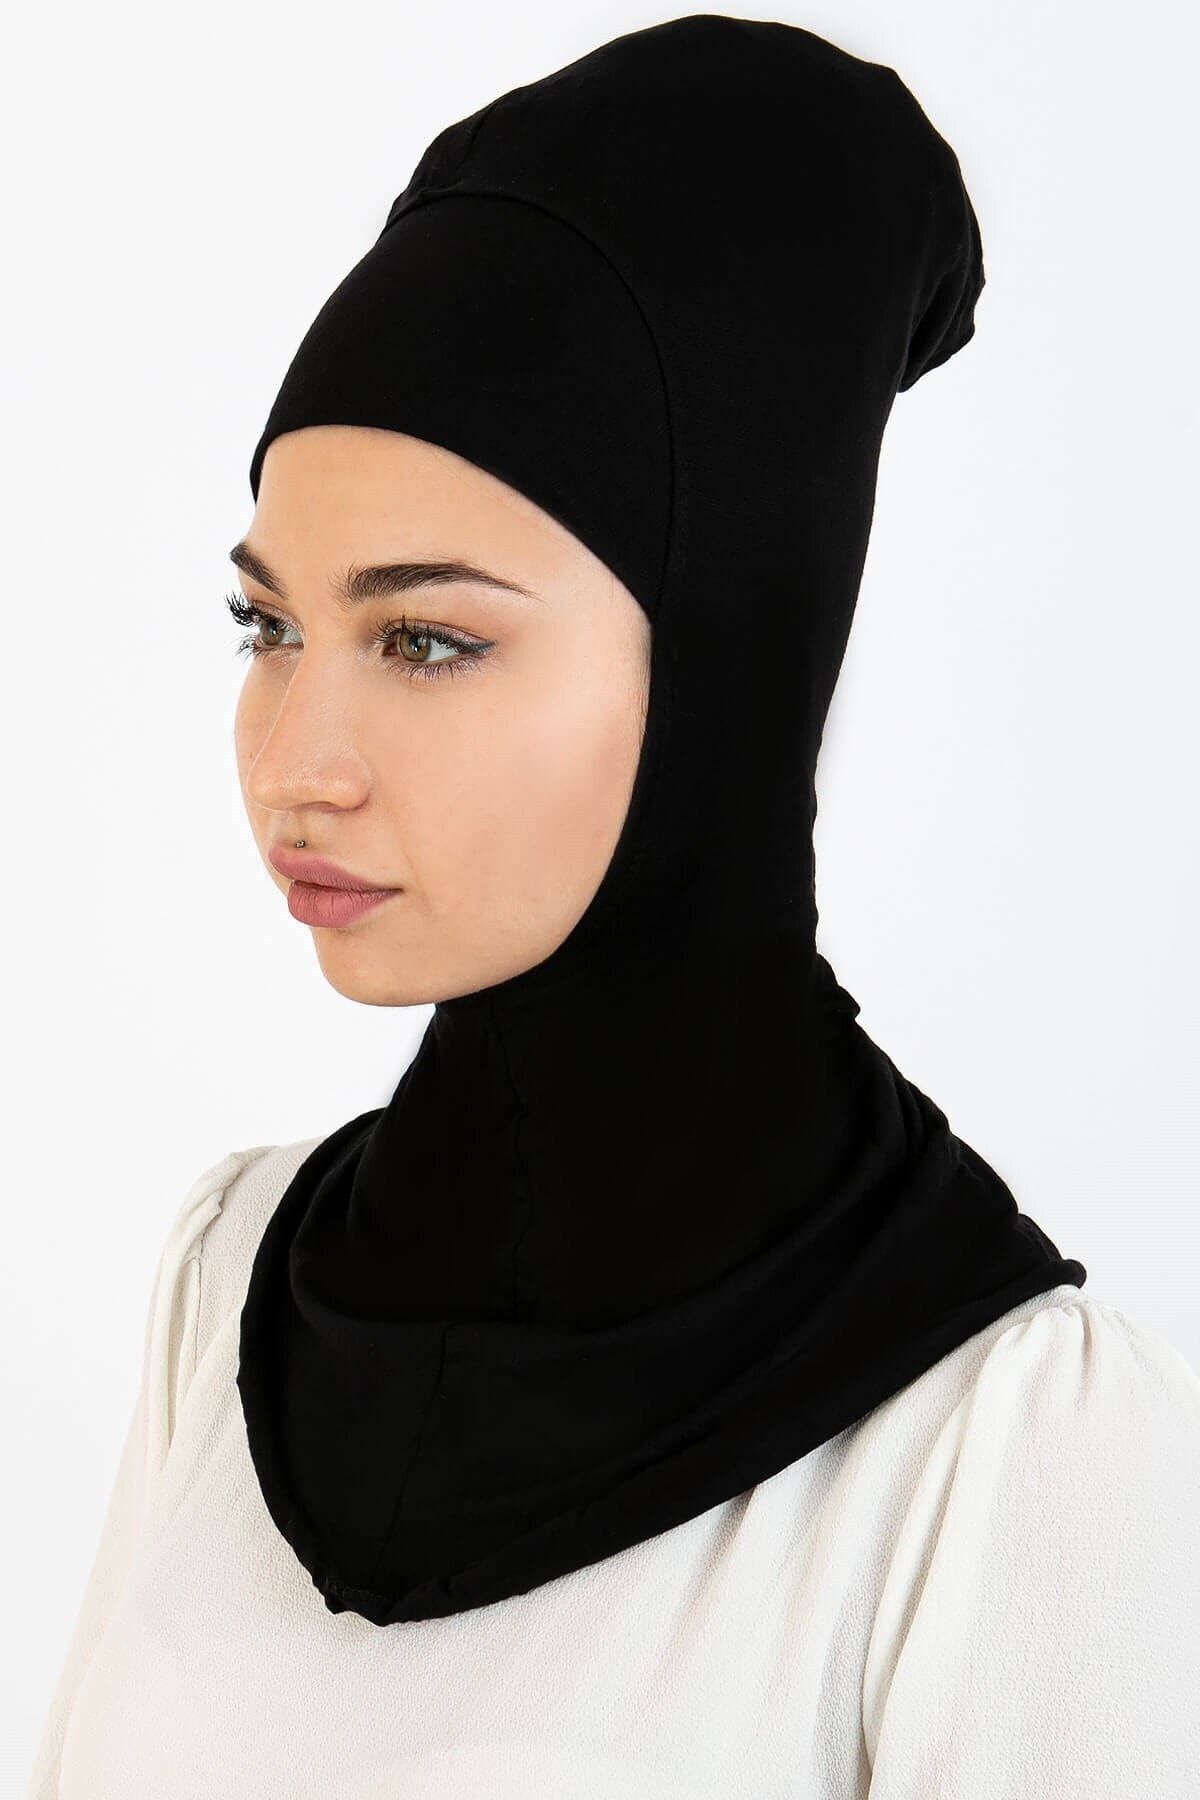 Eca Boyunluklu Hijab Bone Siyah 03 Ebhb-st224